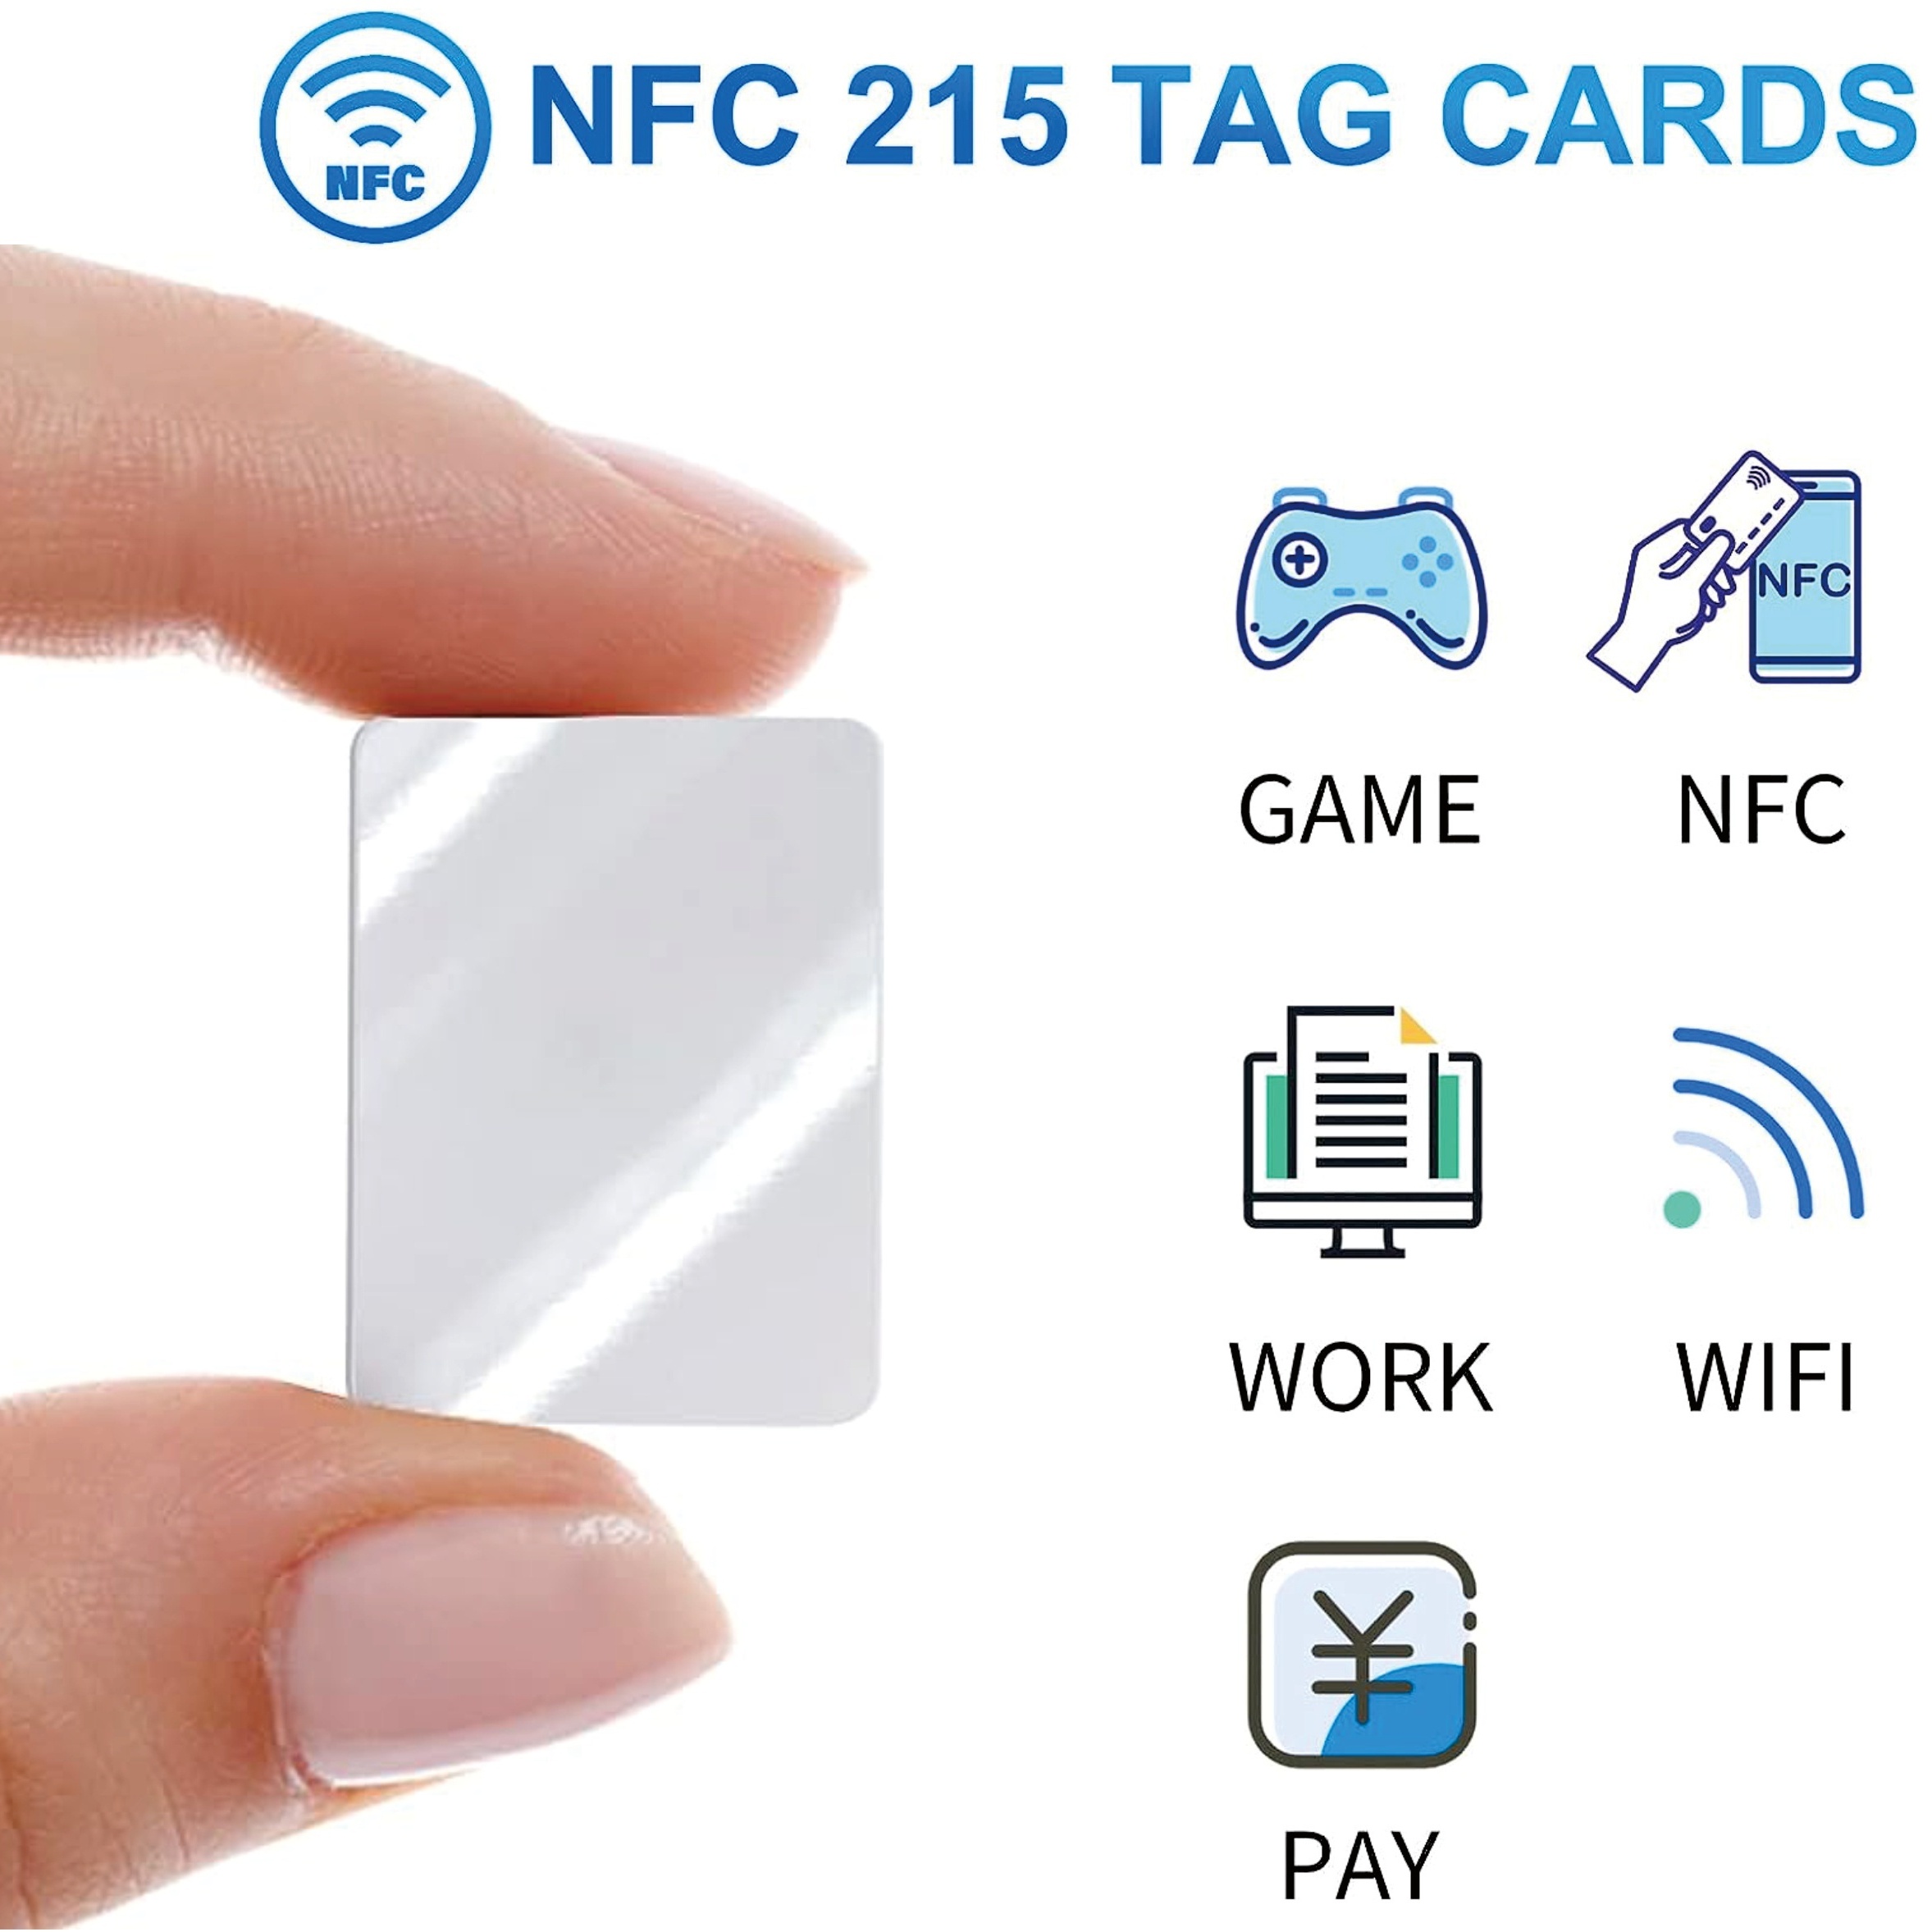 50 etiquetas NFC, tarjetas NFC NTAG215 en blanco, etiquetas NFC en blanco,  monedas de chip NFC blancas, etiquetas imprimibles, tarjetas redondas de